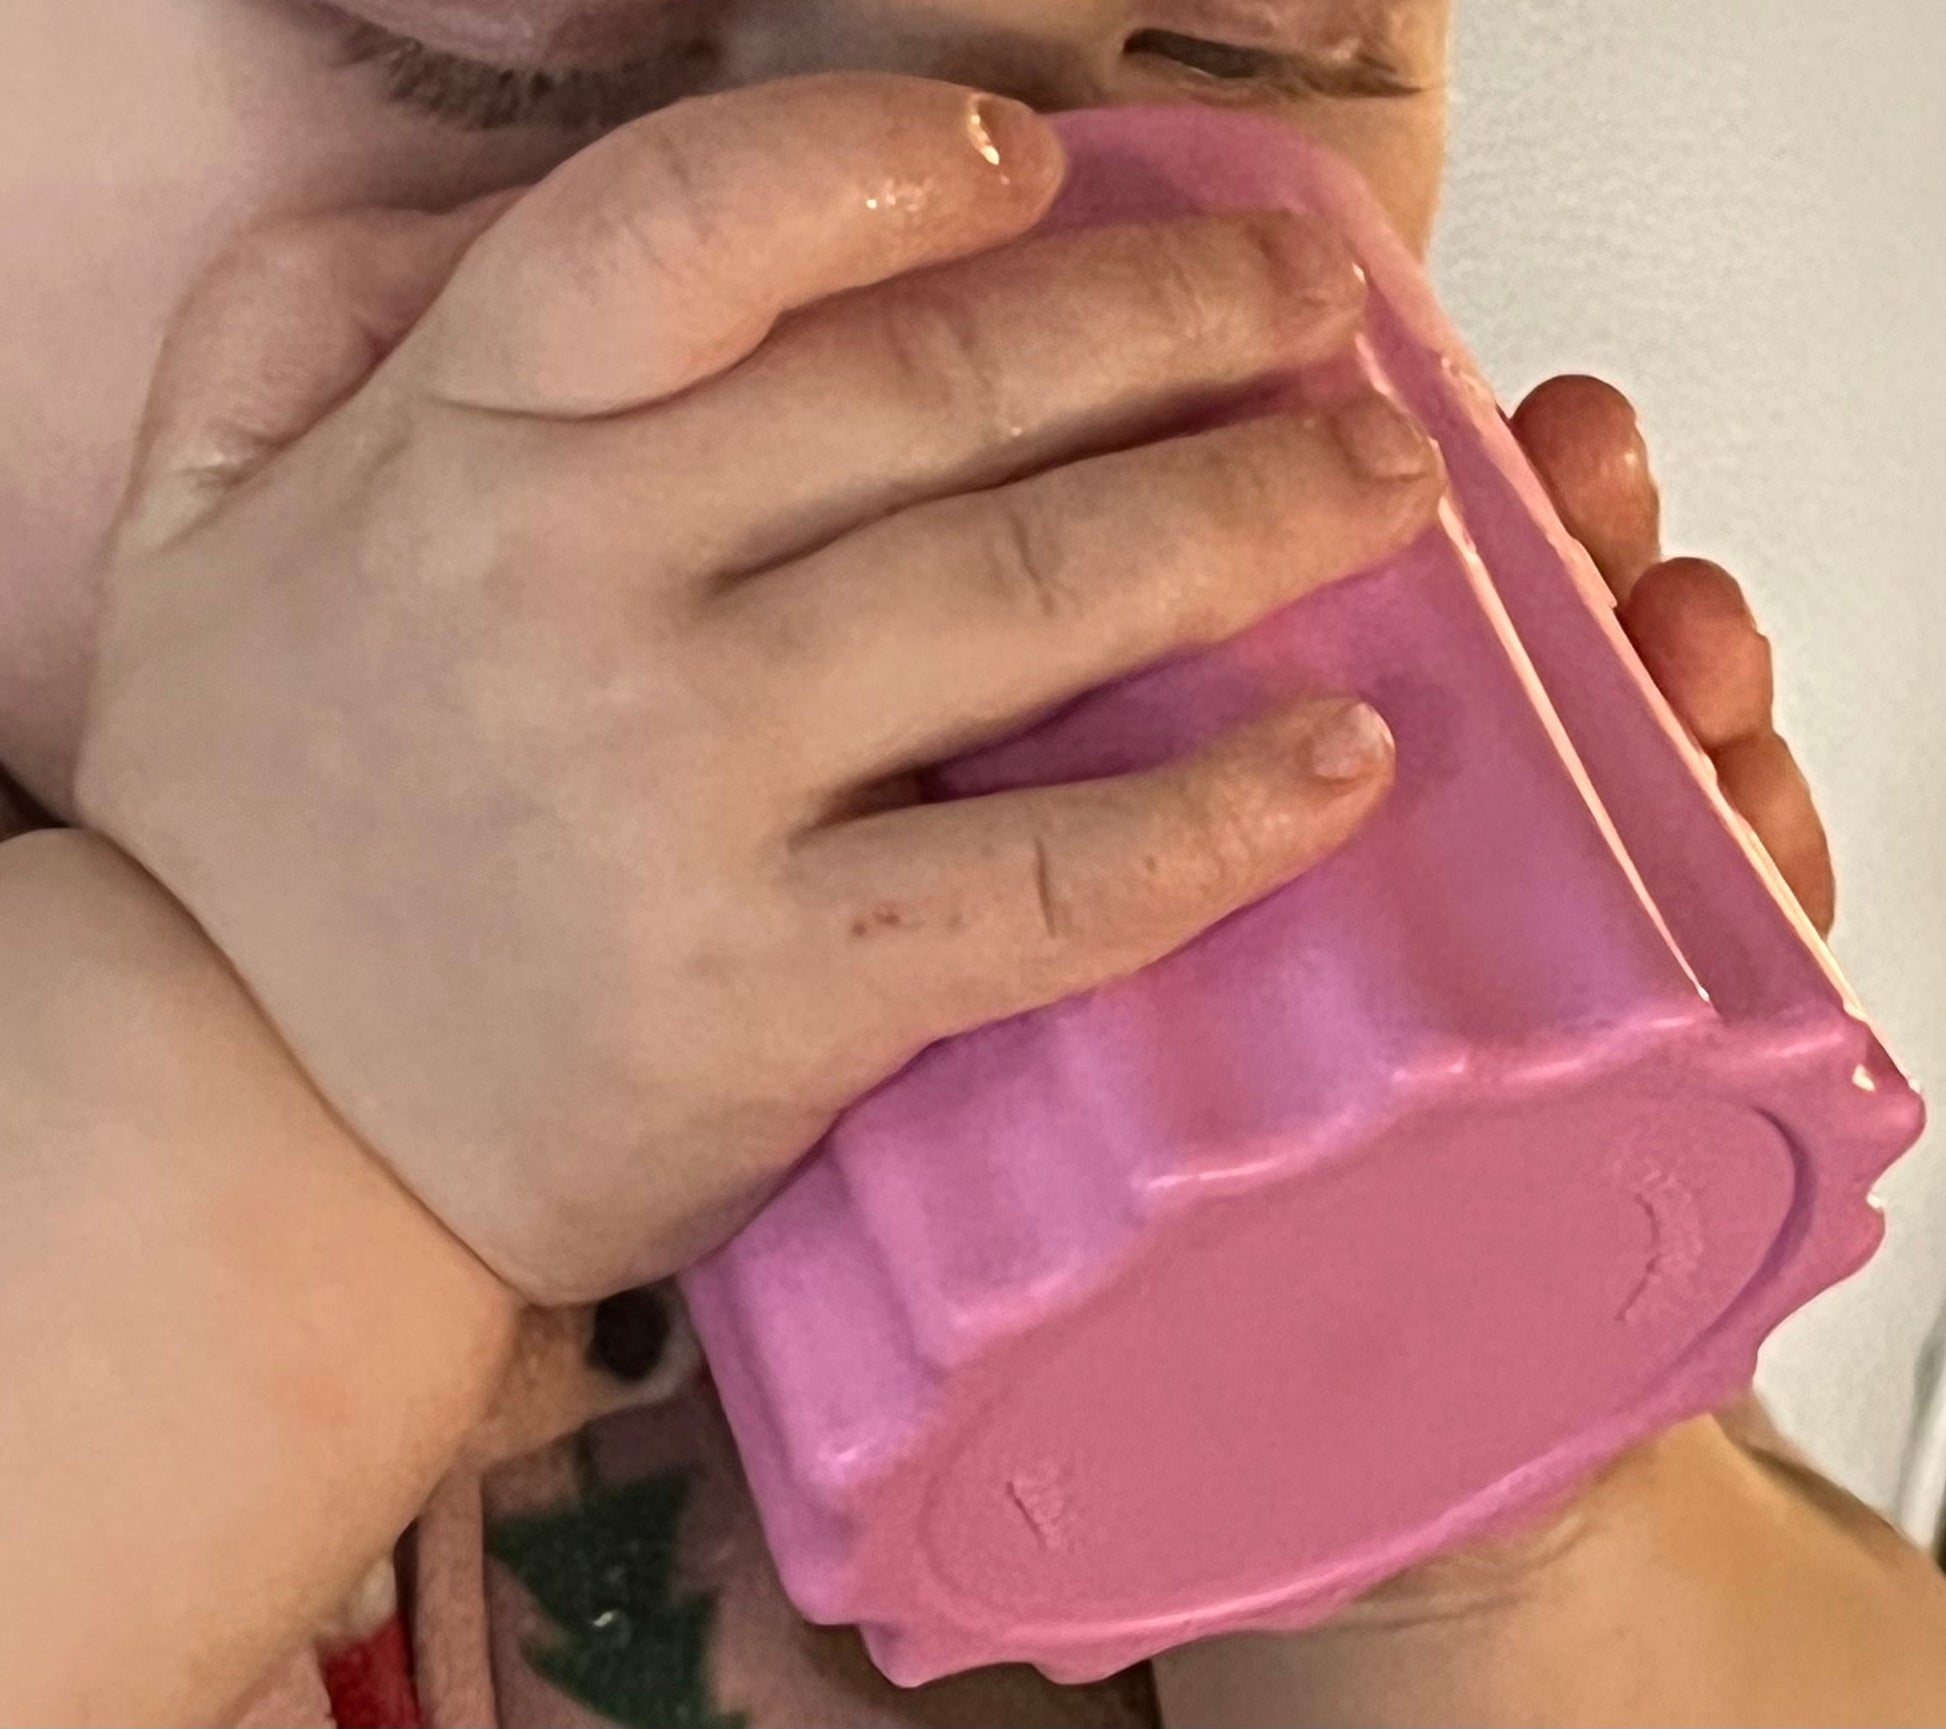  EZTOTZ Tough To Tip BPA Free Plastic Baby Cups USA